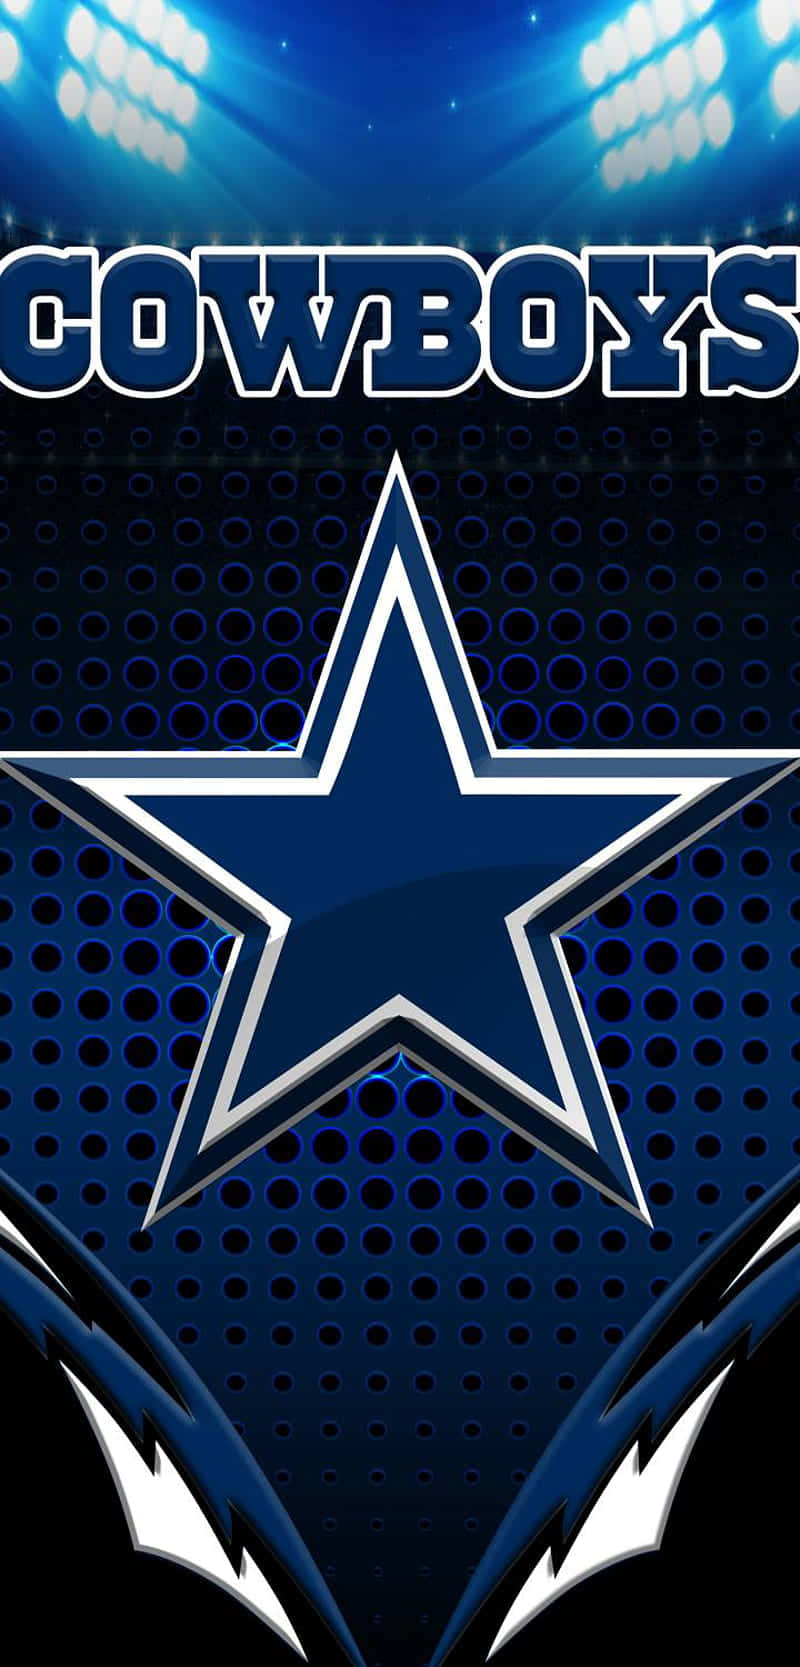 !Nyd Dallas Cowboys Wallpaper på din iPhone! Wallpaper